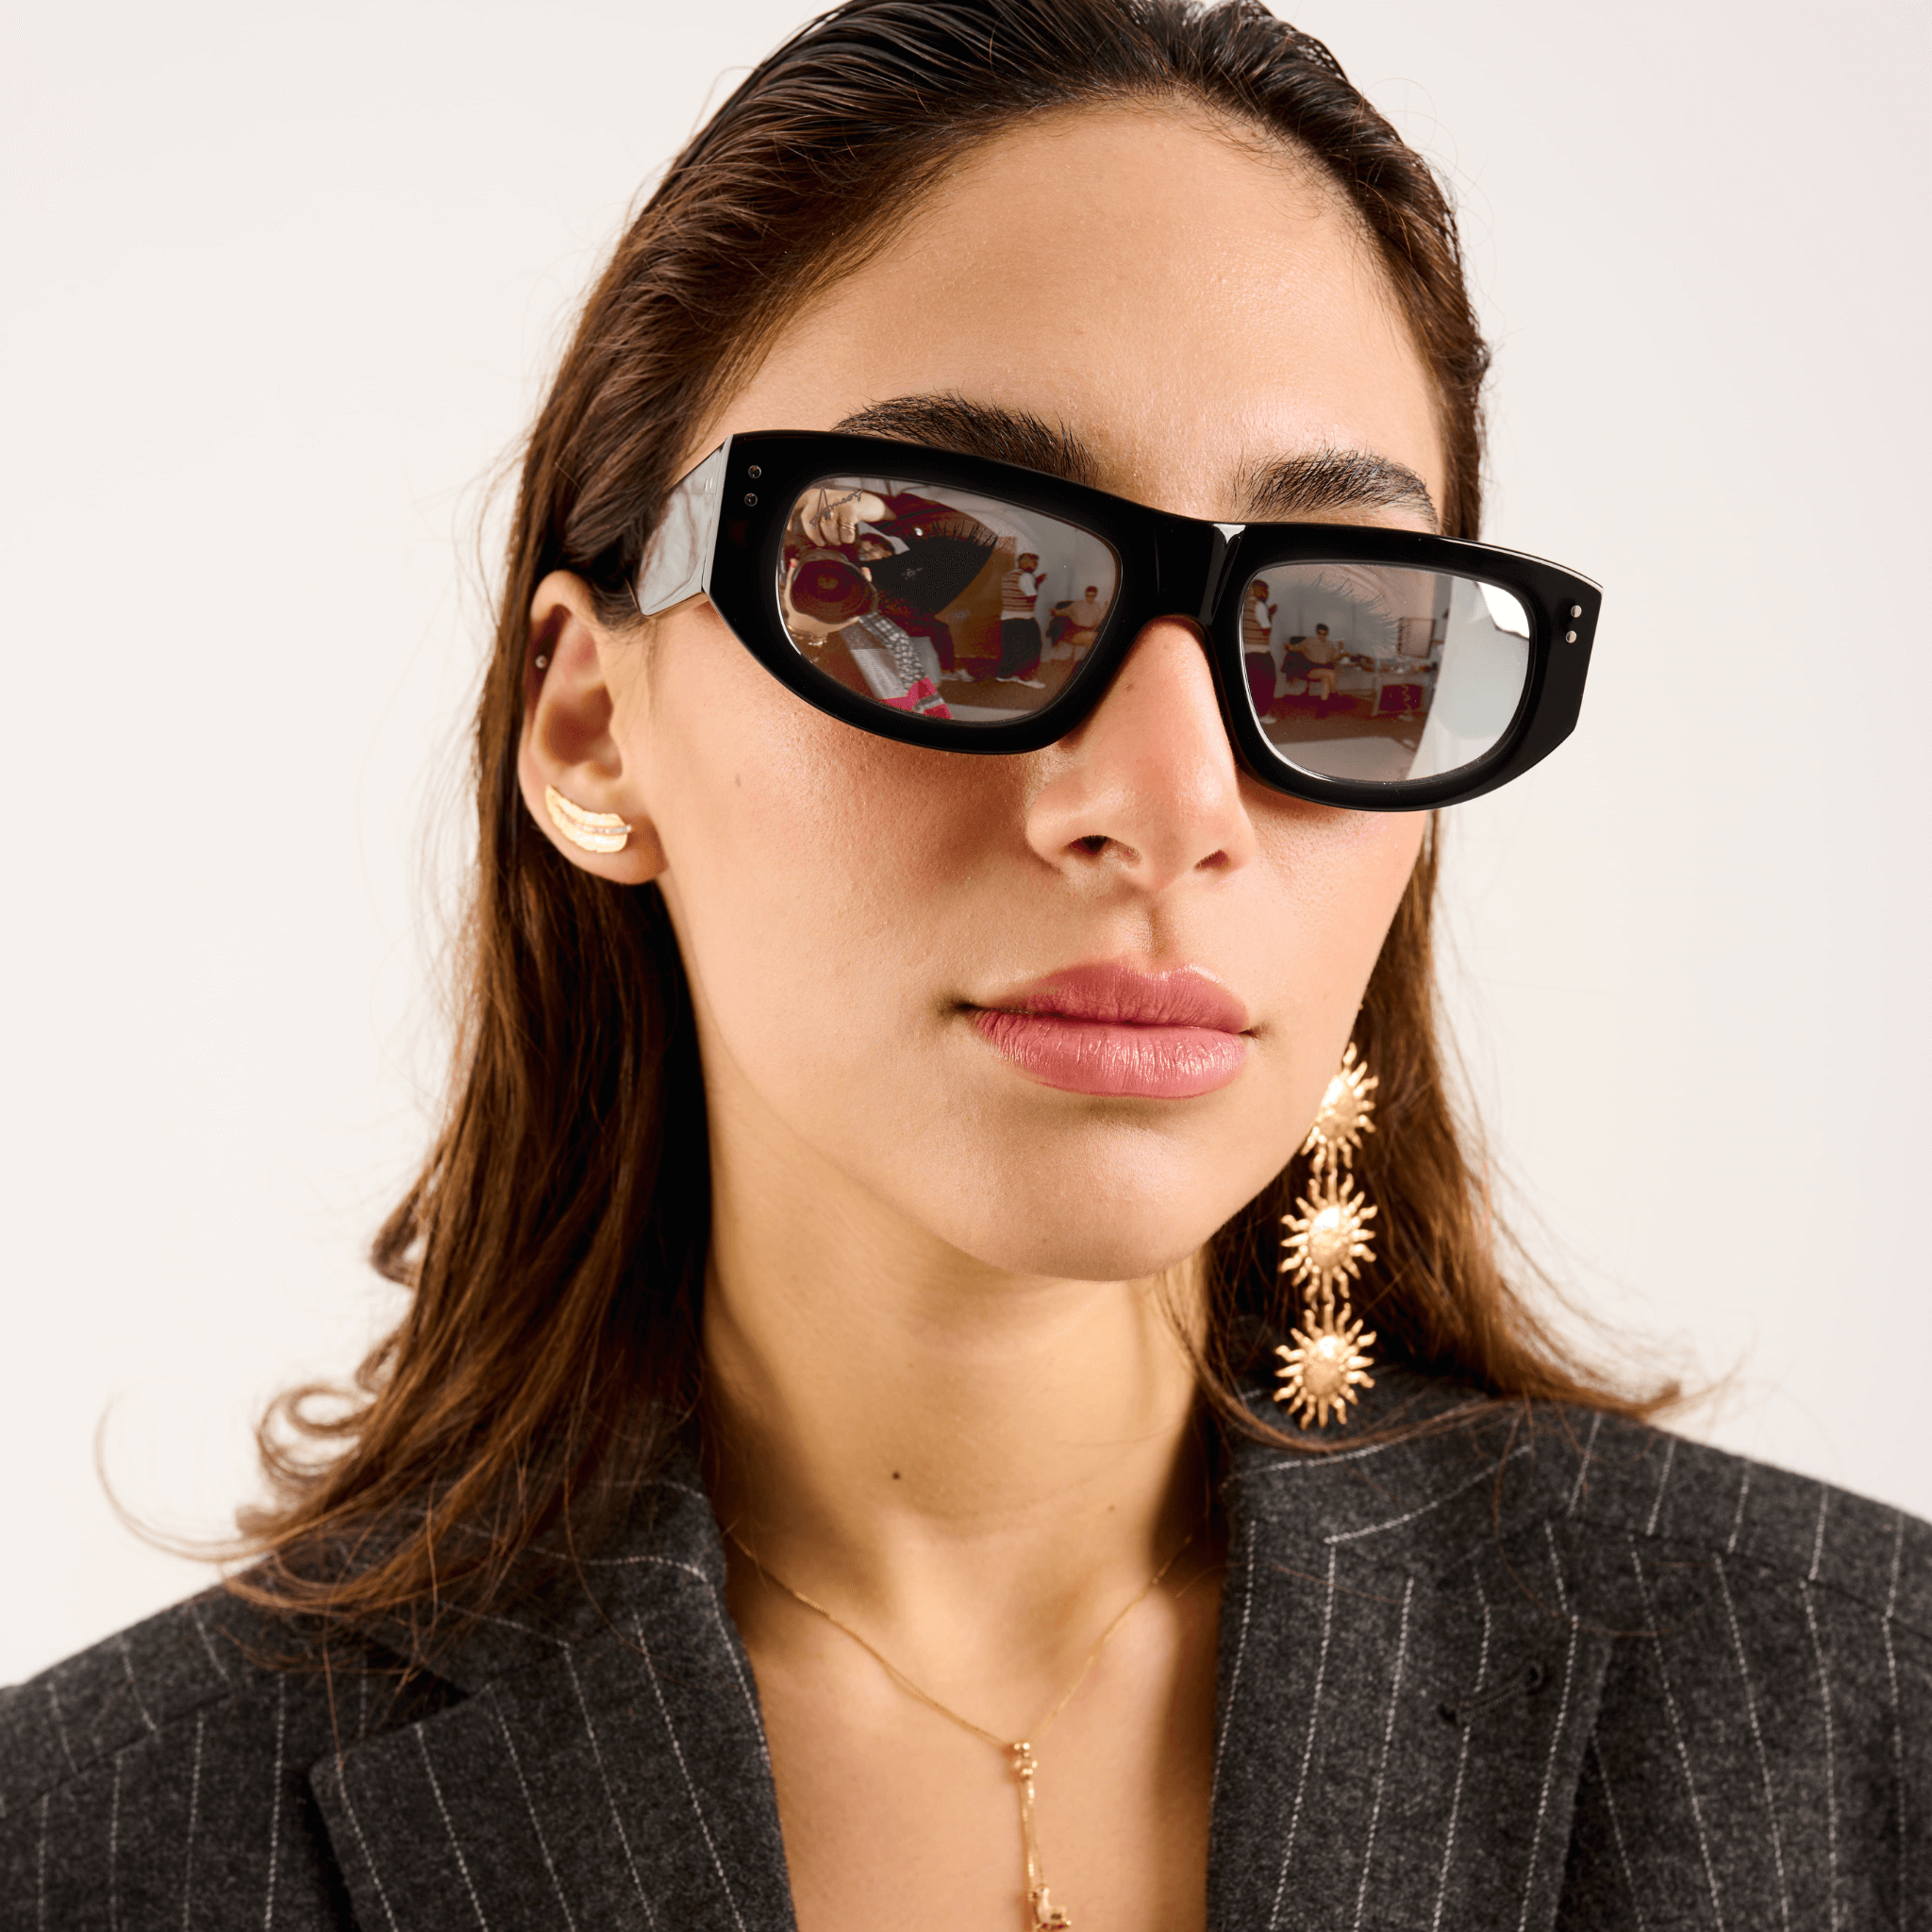 Ameos Forever collection Dex model. Black frames with silver, reflective lenses. Genderless, gender neutral eyewear